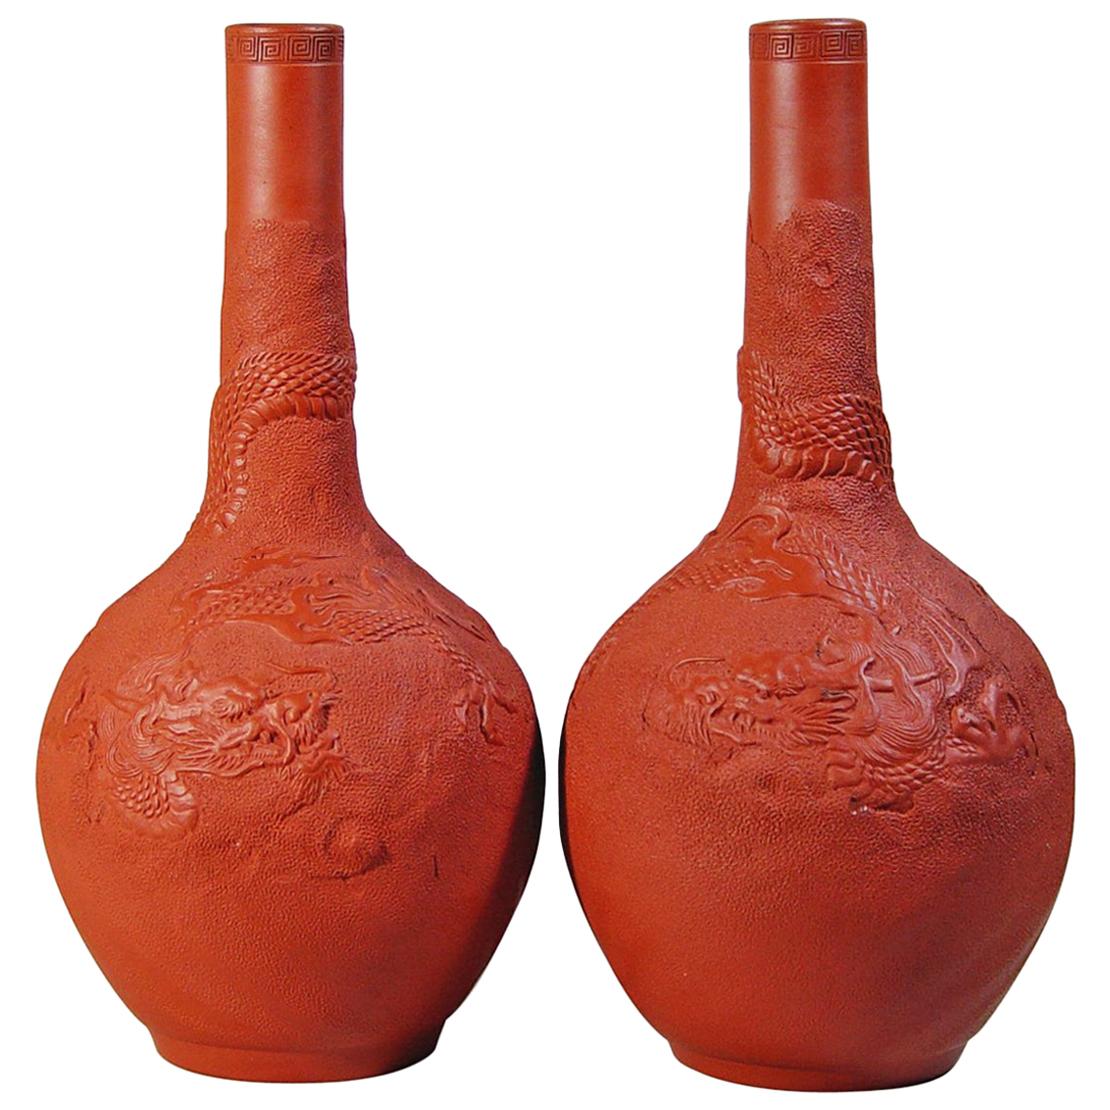 Japanese Redware Pottery Vases